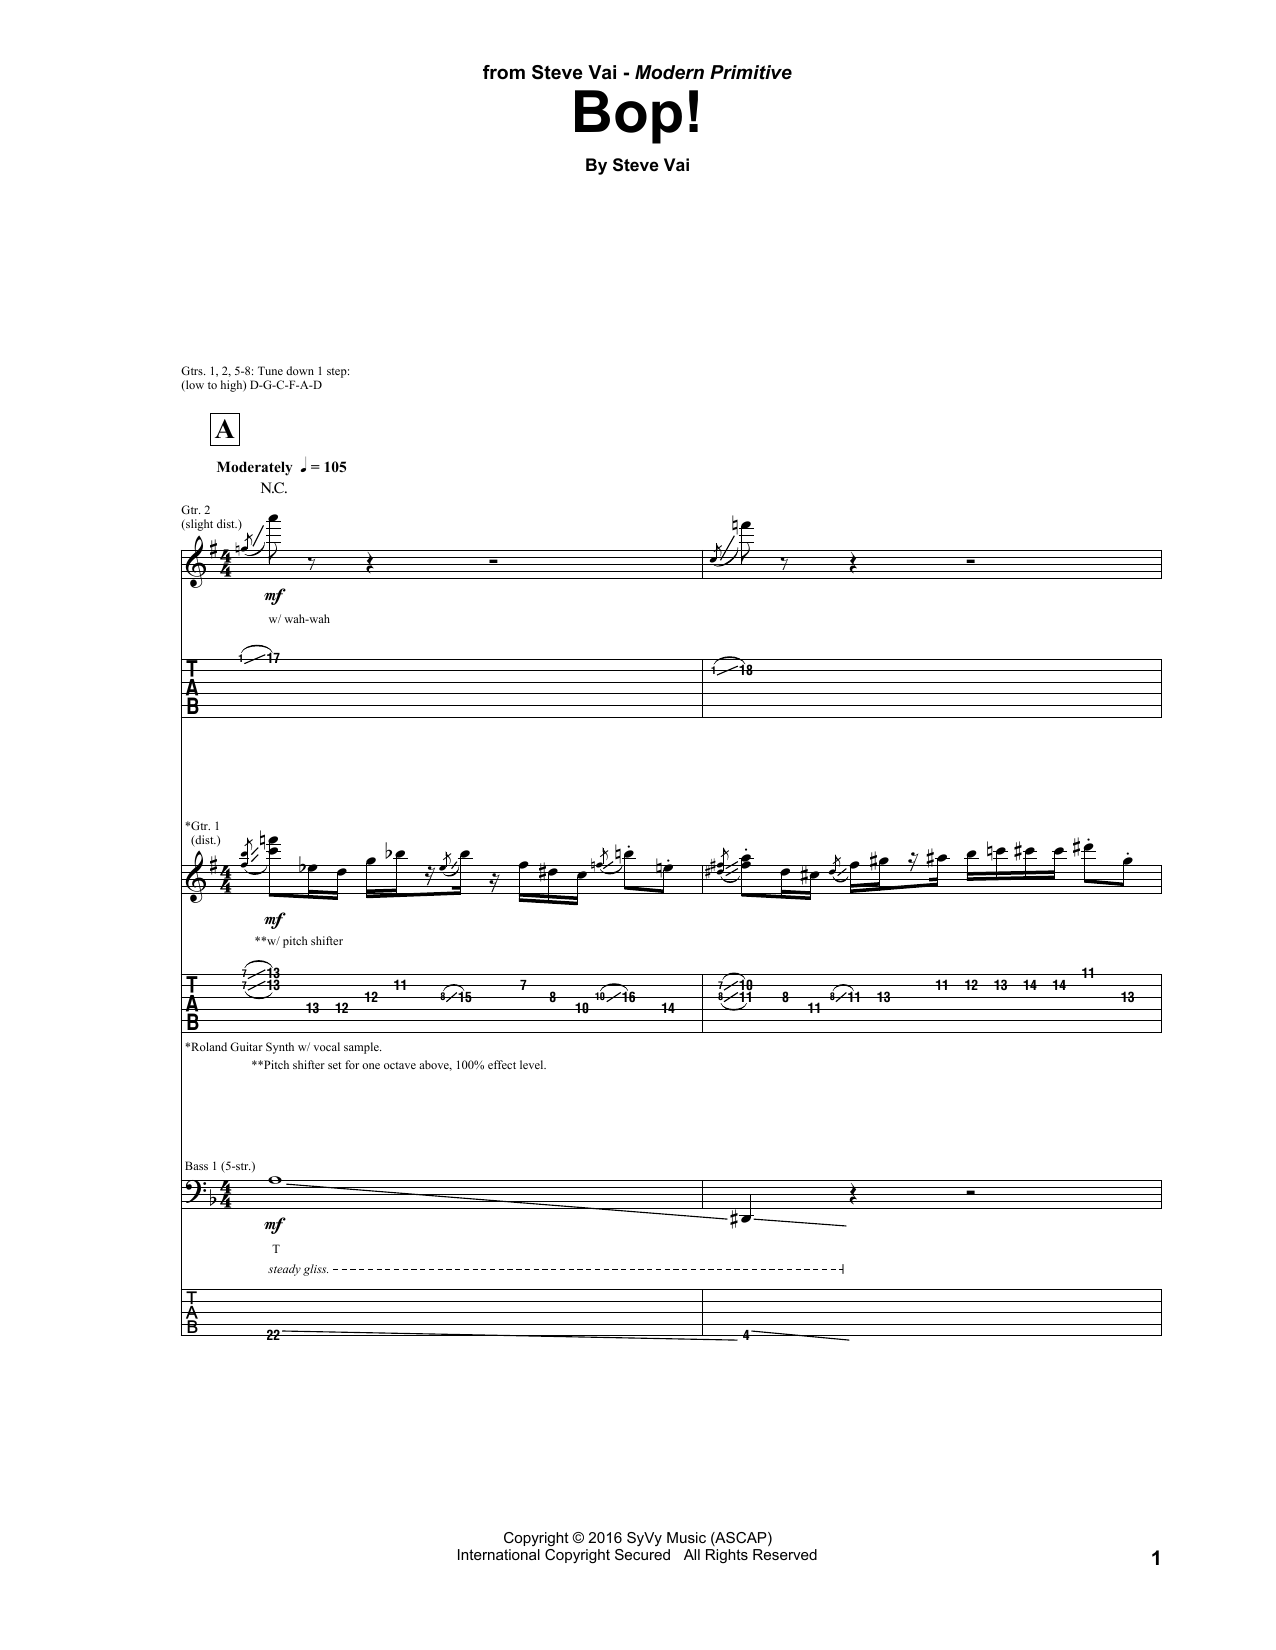 Steve Vai Bop! Sheet Music Notes & Chords for Guitar Tab - Download or Print PDF